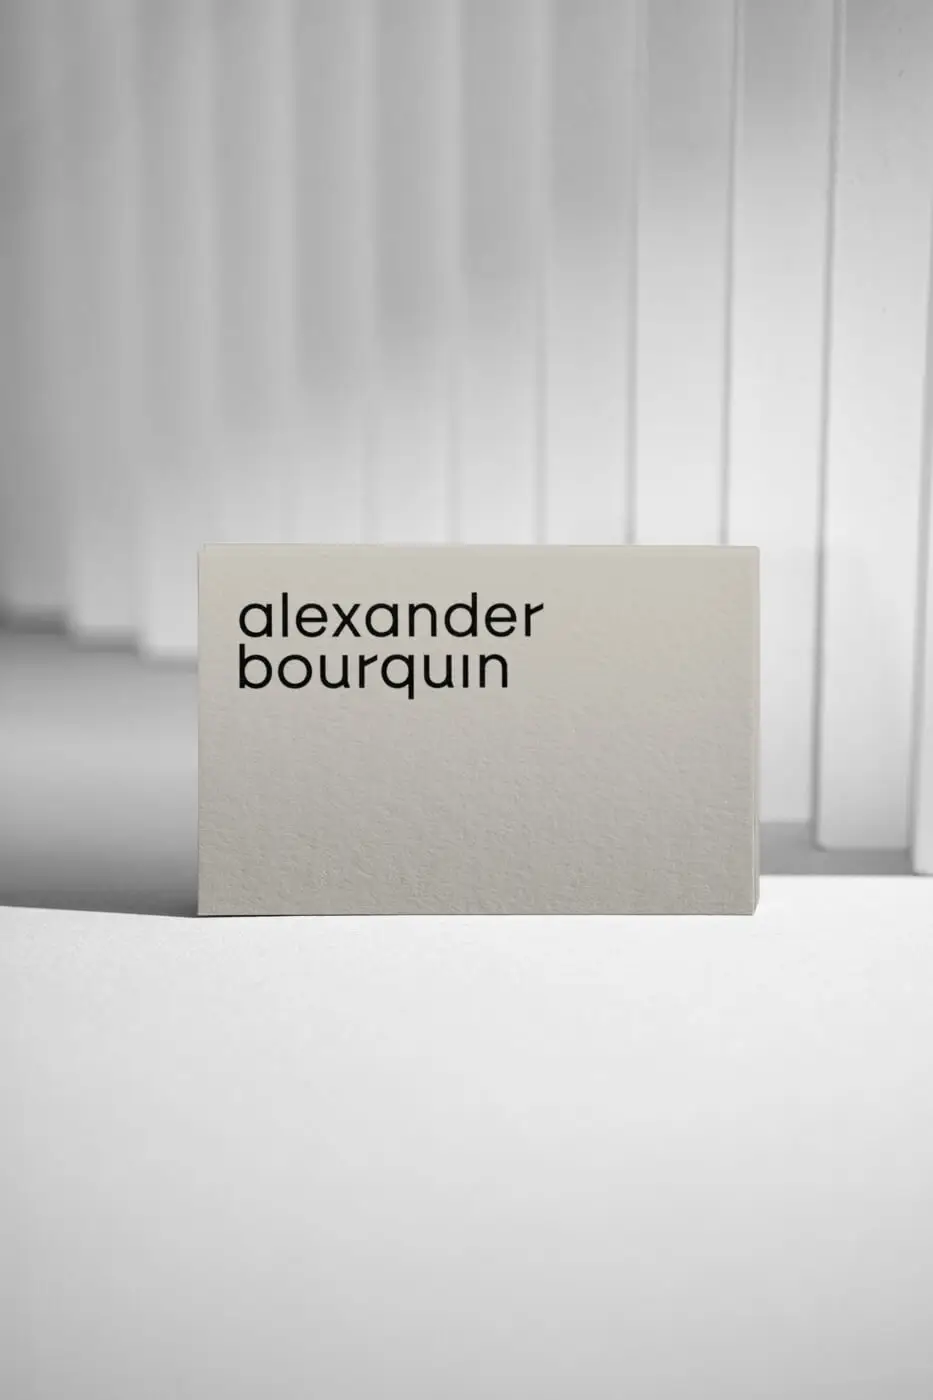 Mona-Wingerter-portfolio-grafiker-grafikdesigner-logo-brand-web-design-responsivedesign-businesscards-sign-kaiserslautern-architect-architekt-logodesign-alexander-bourquin_6